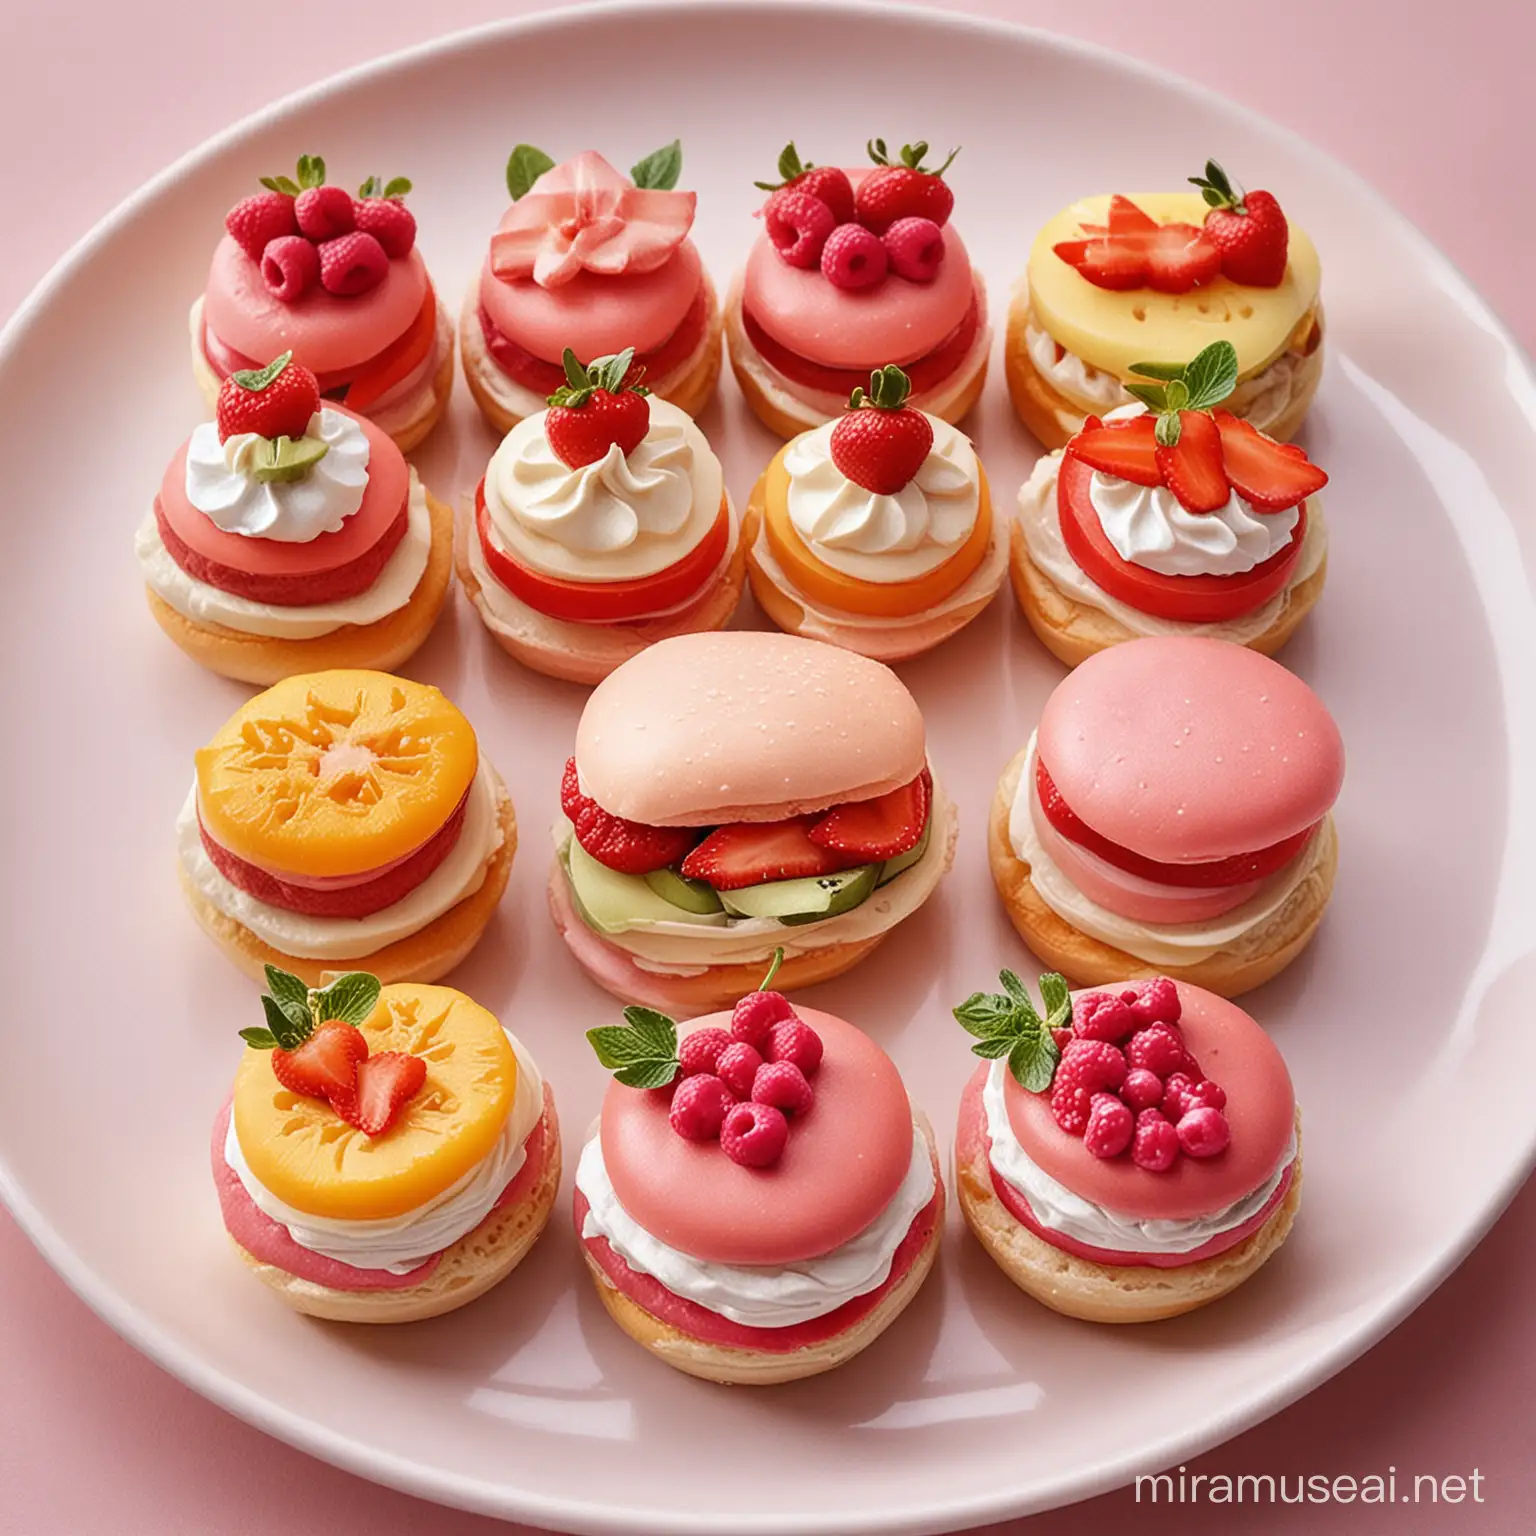 Delightful Pink Themed Mini Burgers and Tiramisu Dessert Platter with Fresh Fruits